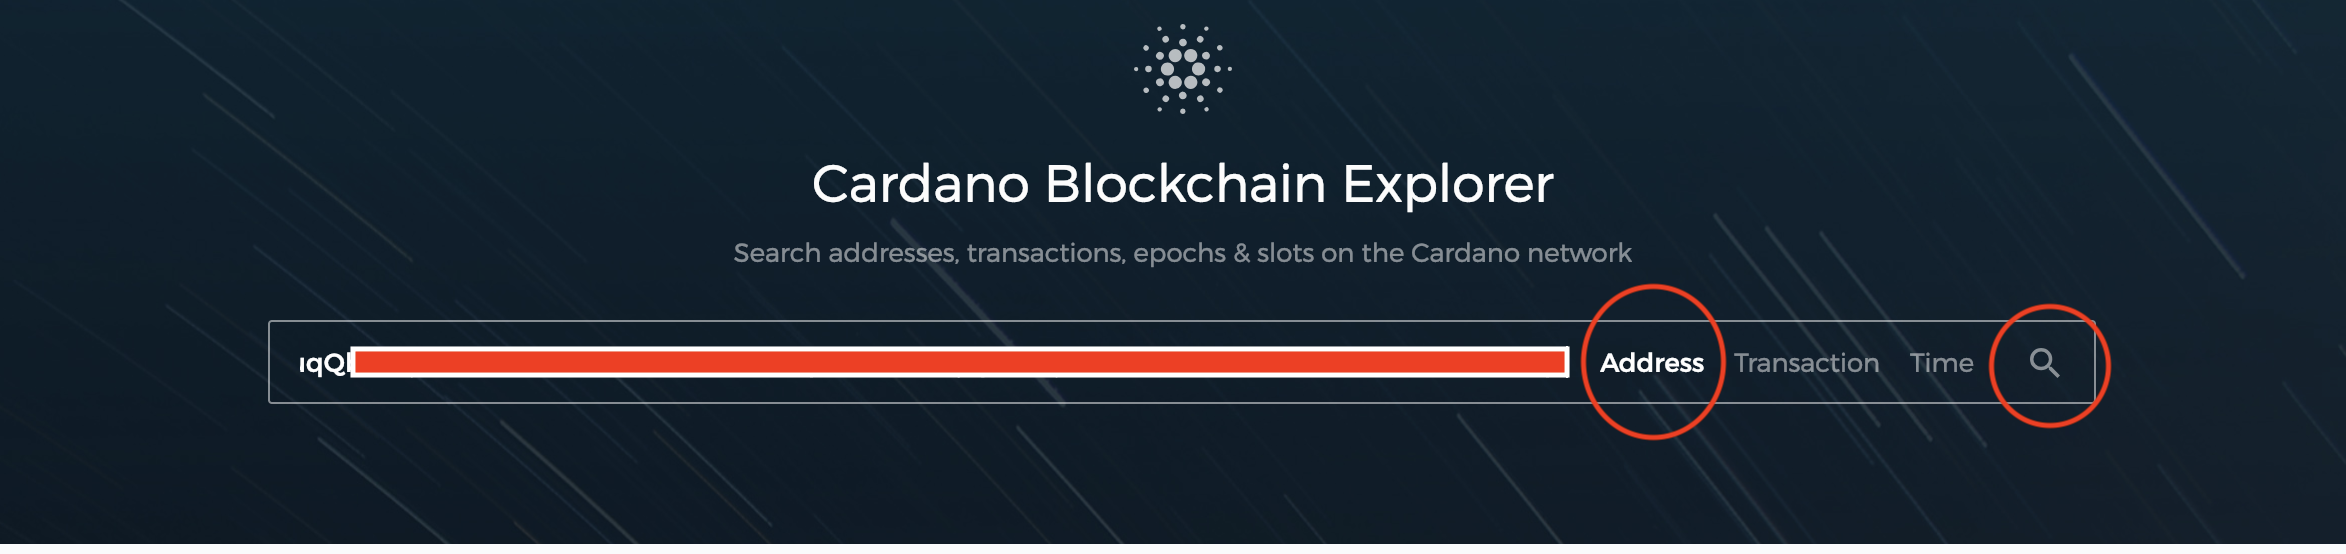 cardano_blockchain_explorer_paper_wallet.png